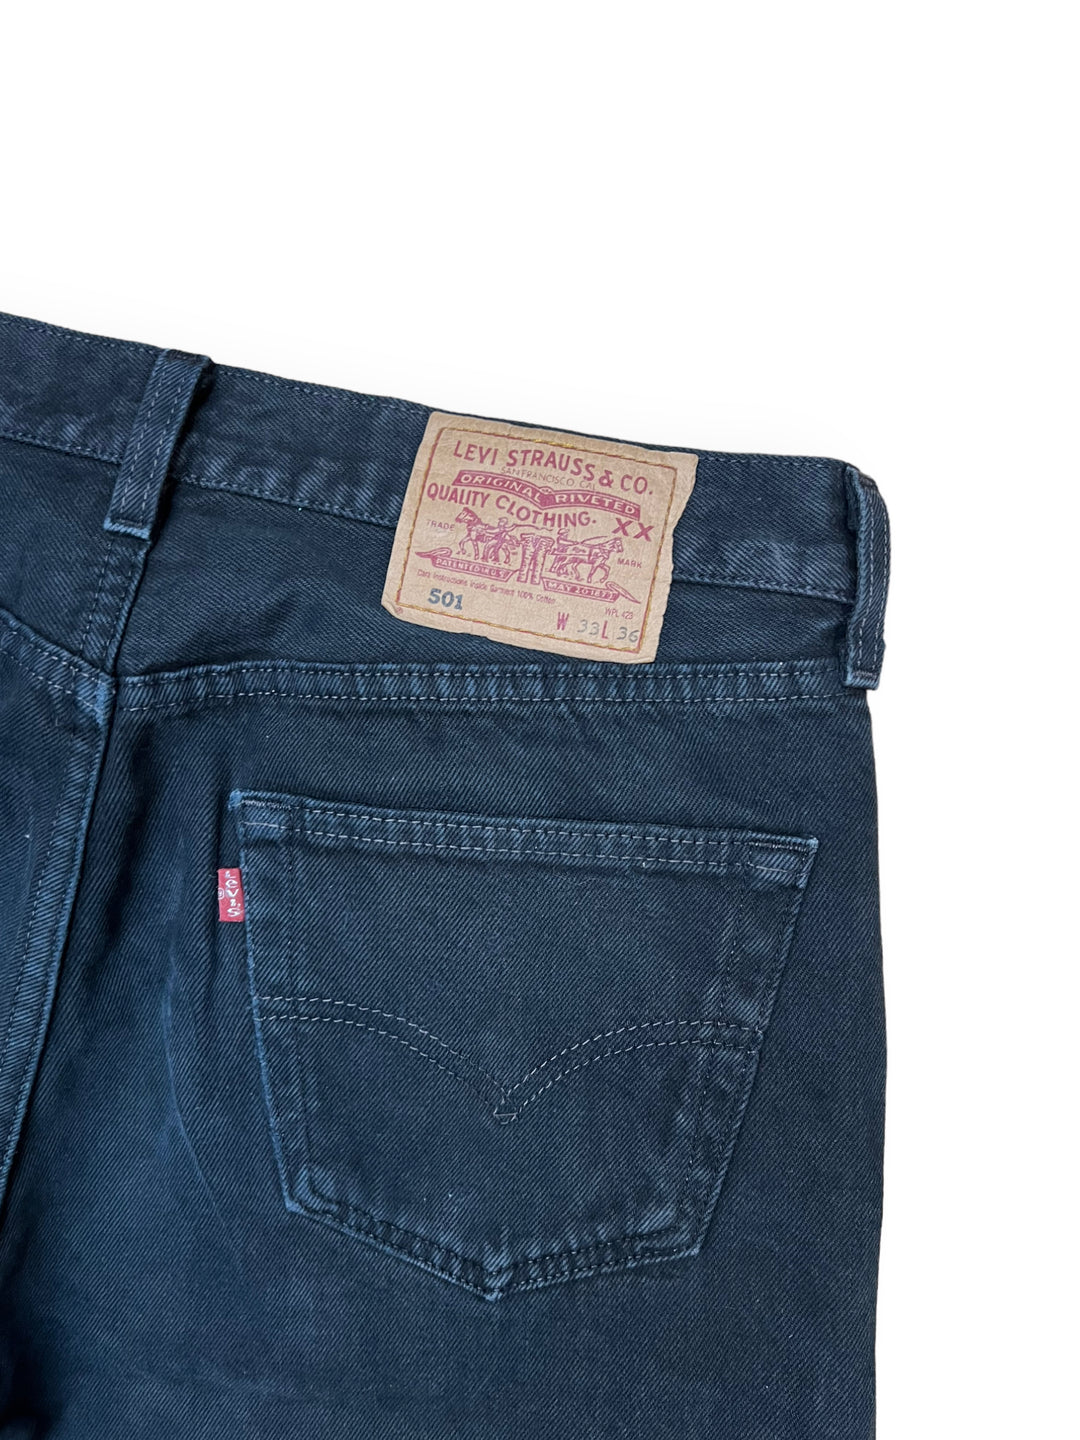 Vintage Levi’s 501 Denim Shorts Men’s Medium